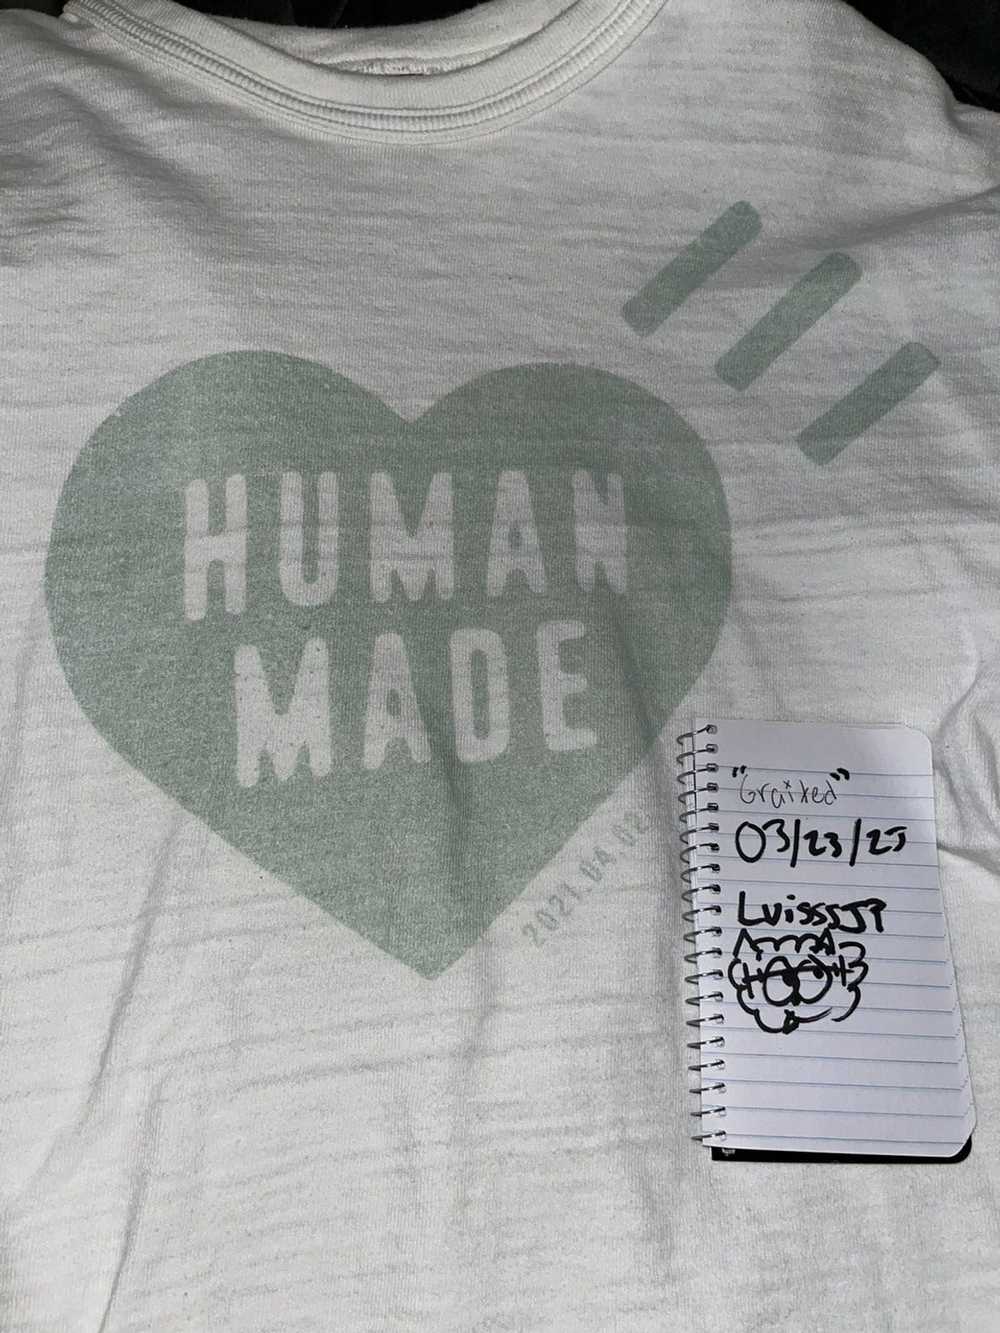 Human Made Bold Heart Logo T-Shirt in Blue : Human Made UK at SEIKK